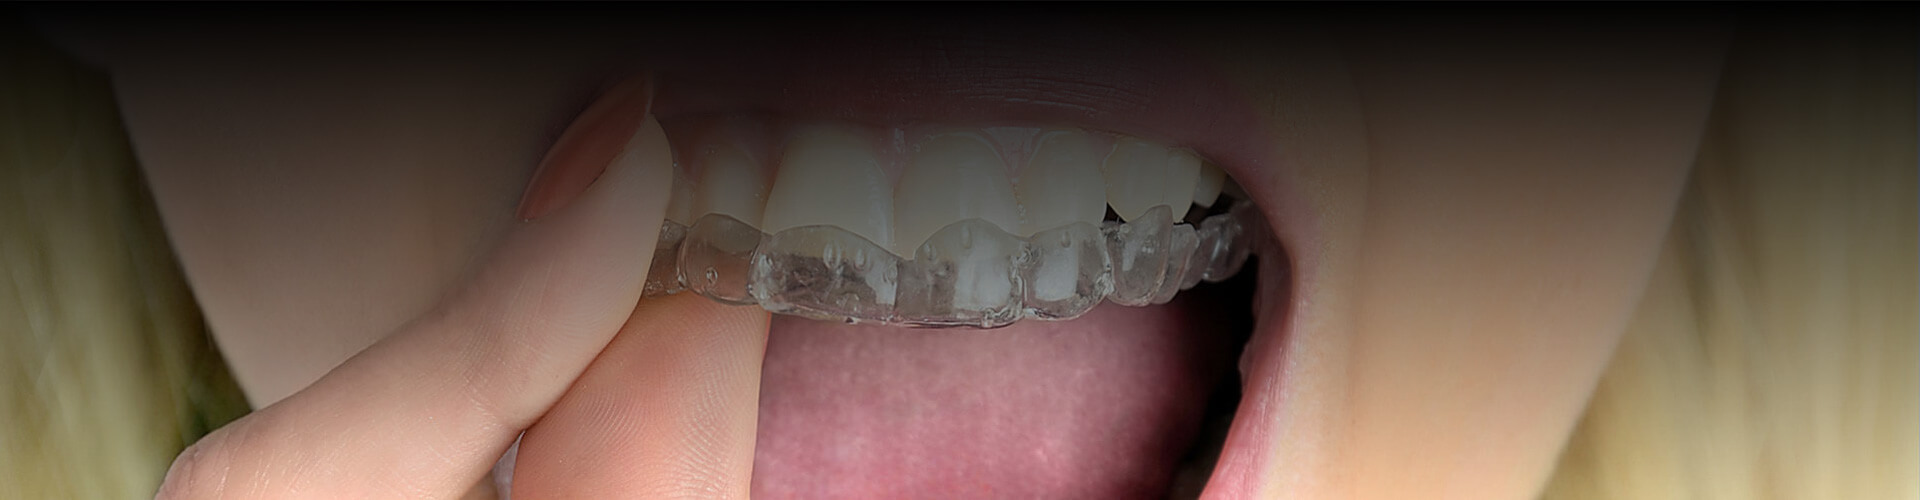 Closeup of woman wearing dental prosthetic on her teeth